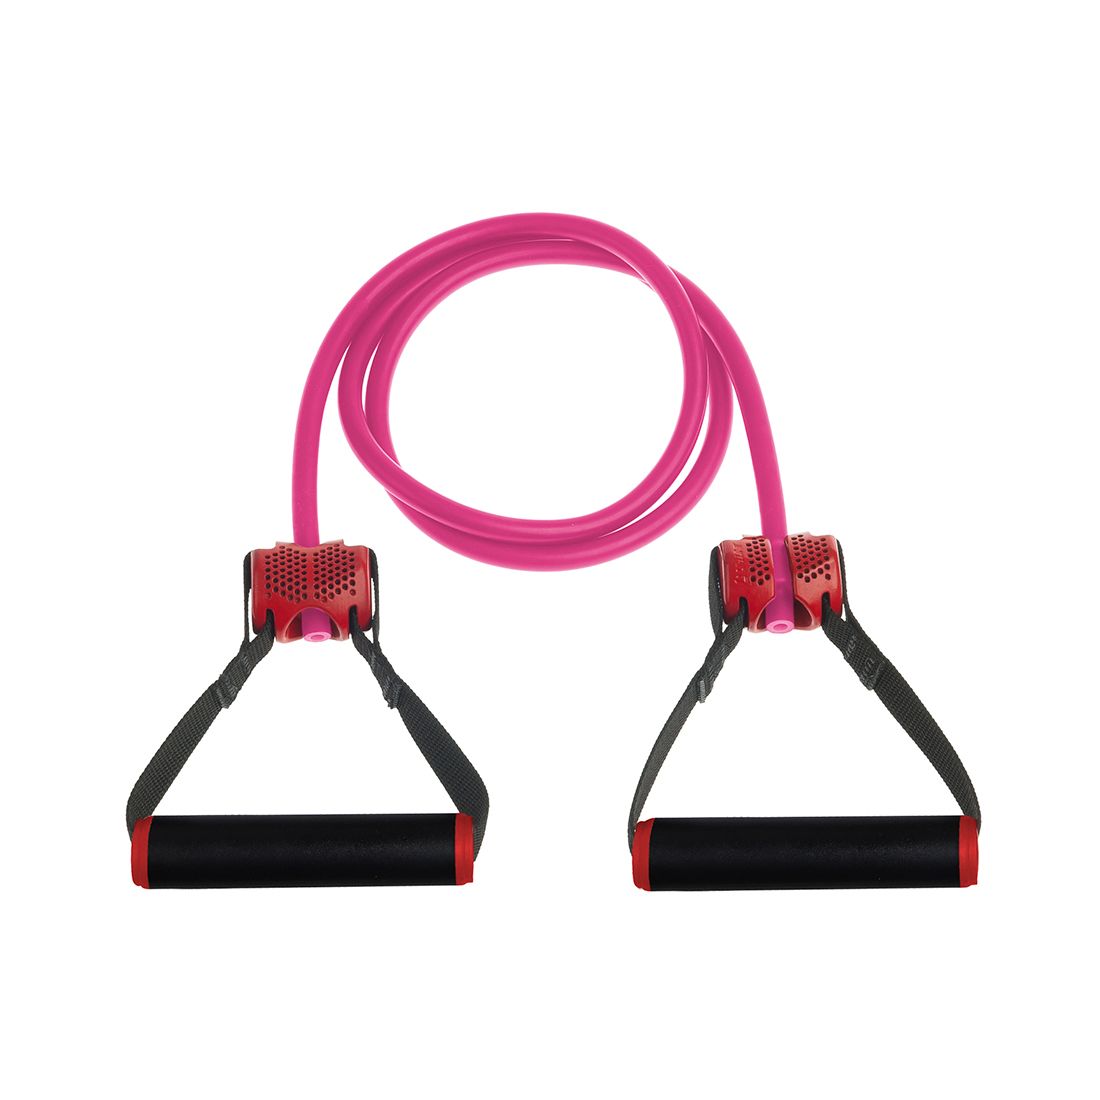 Lifeline Fitness Max Flex Cable Kit